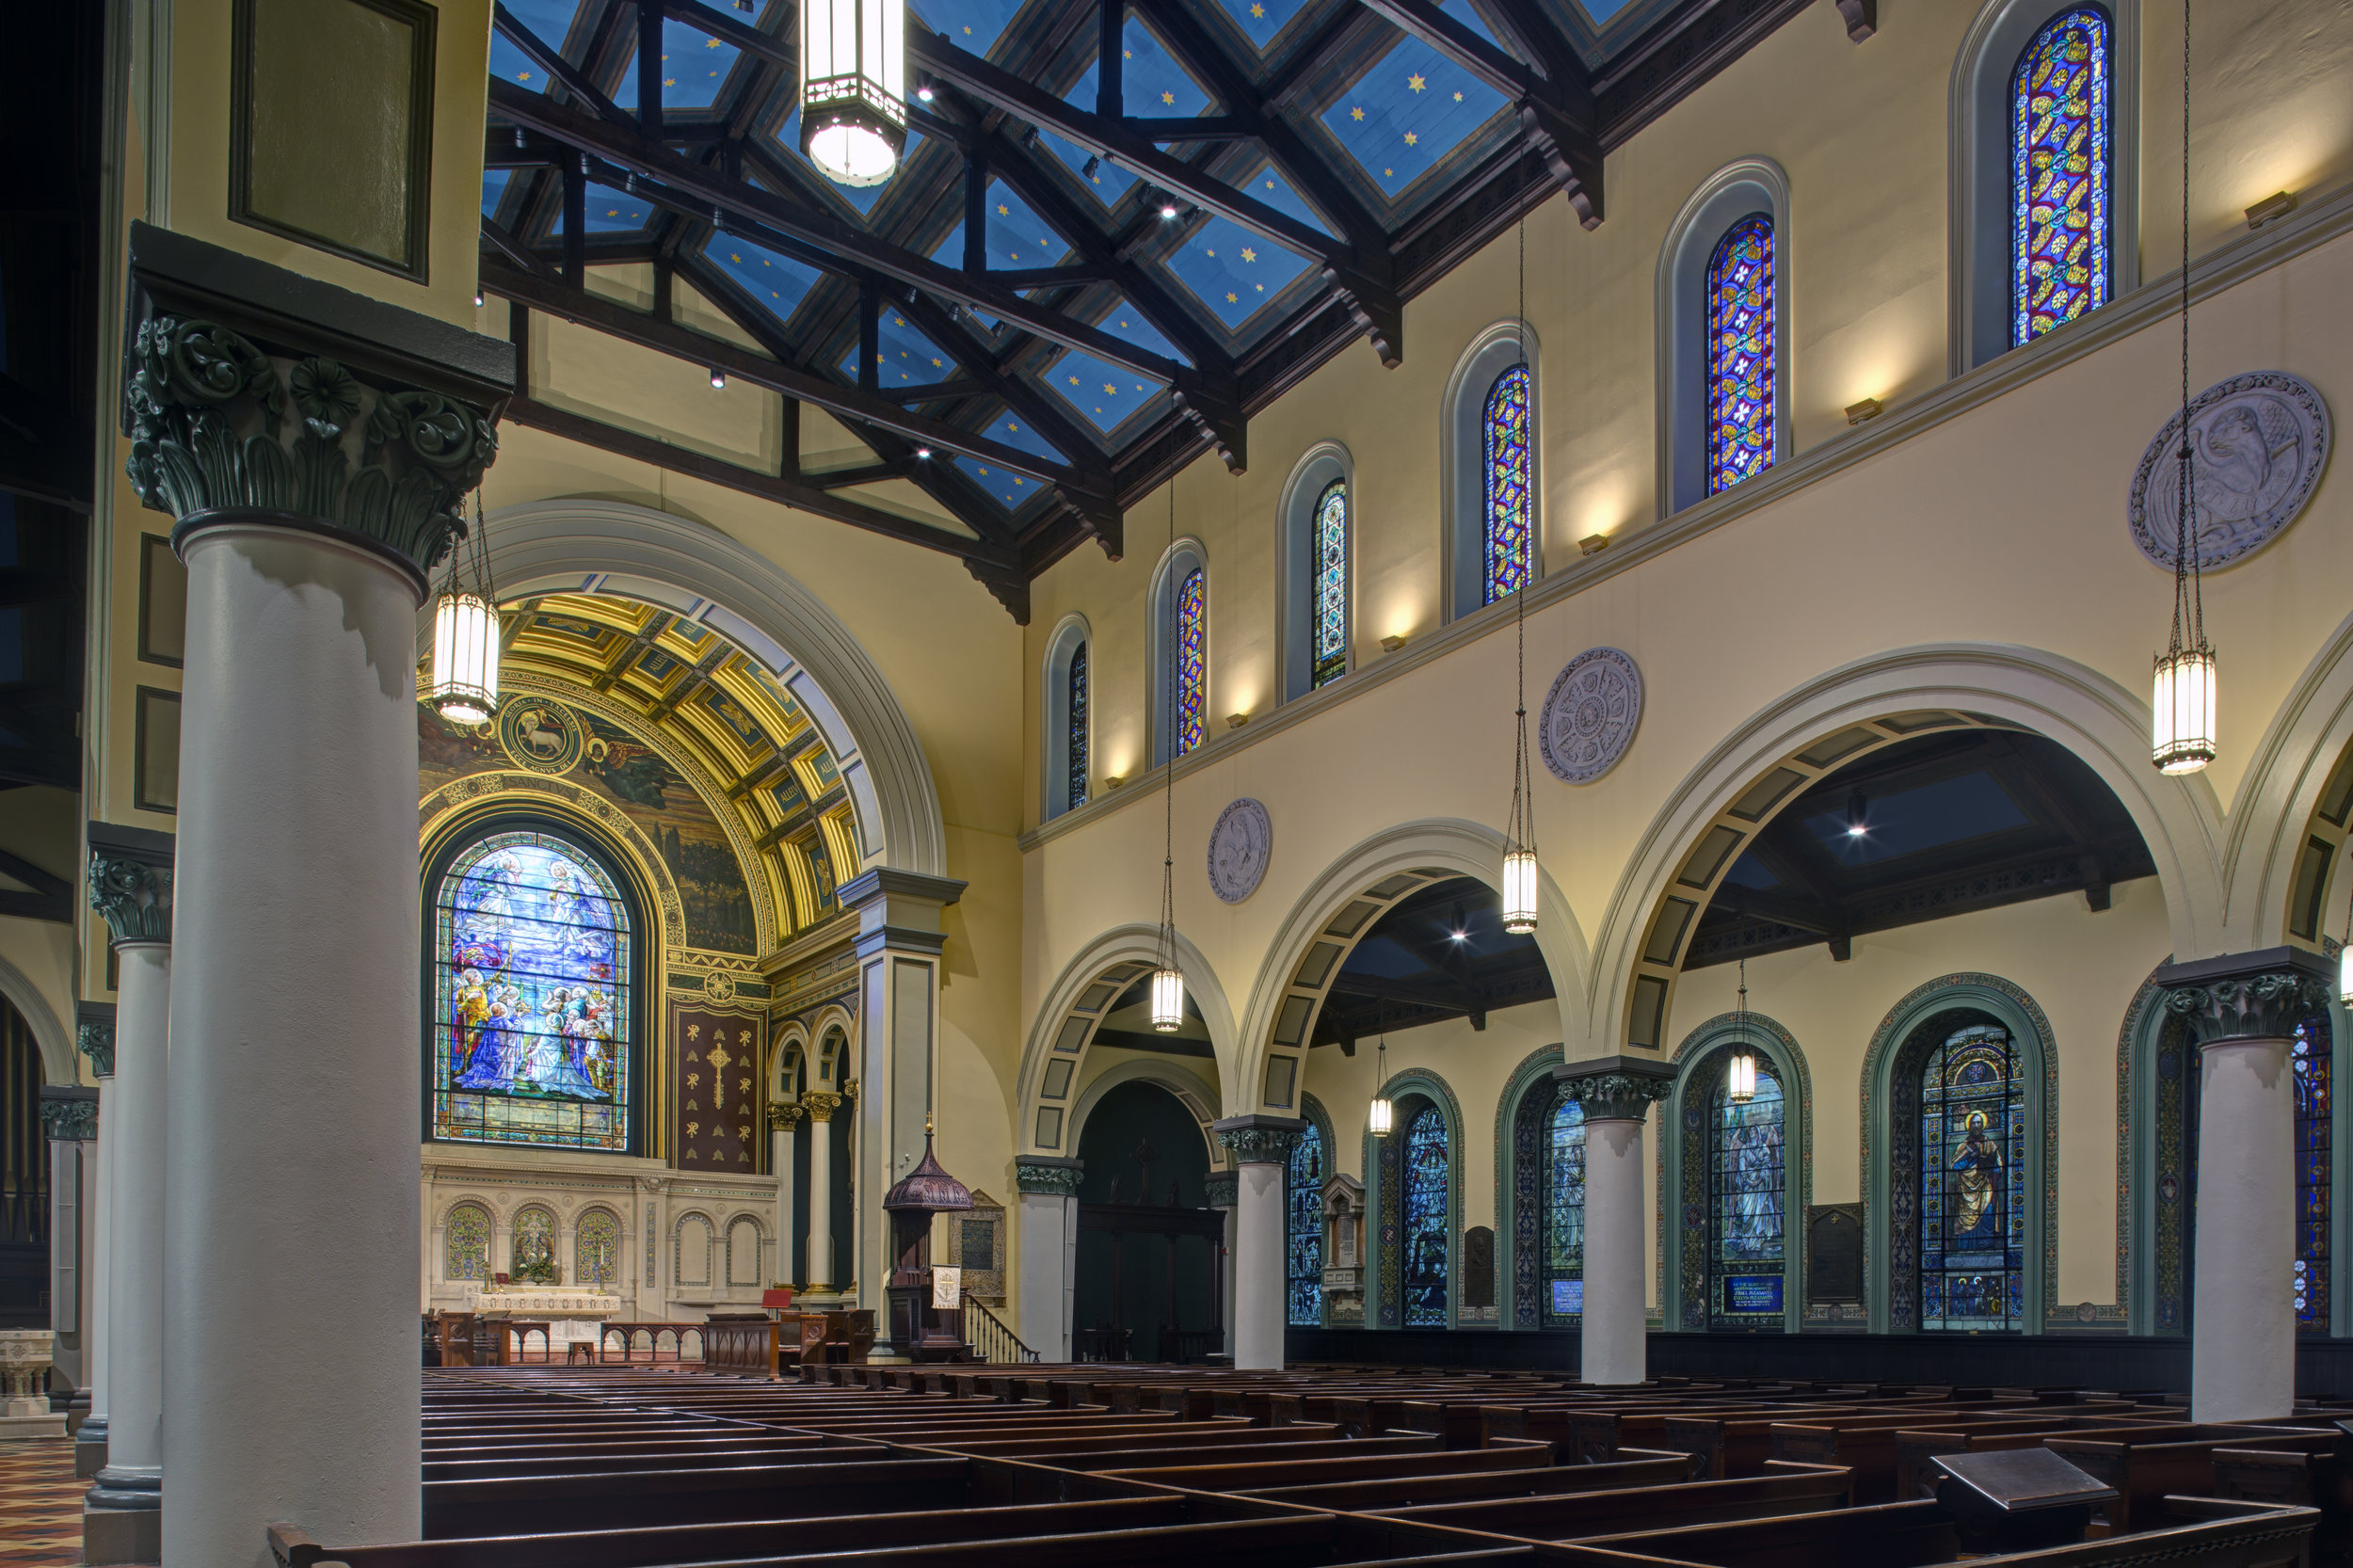 St. Paul’s Episcopal Church, after renovation